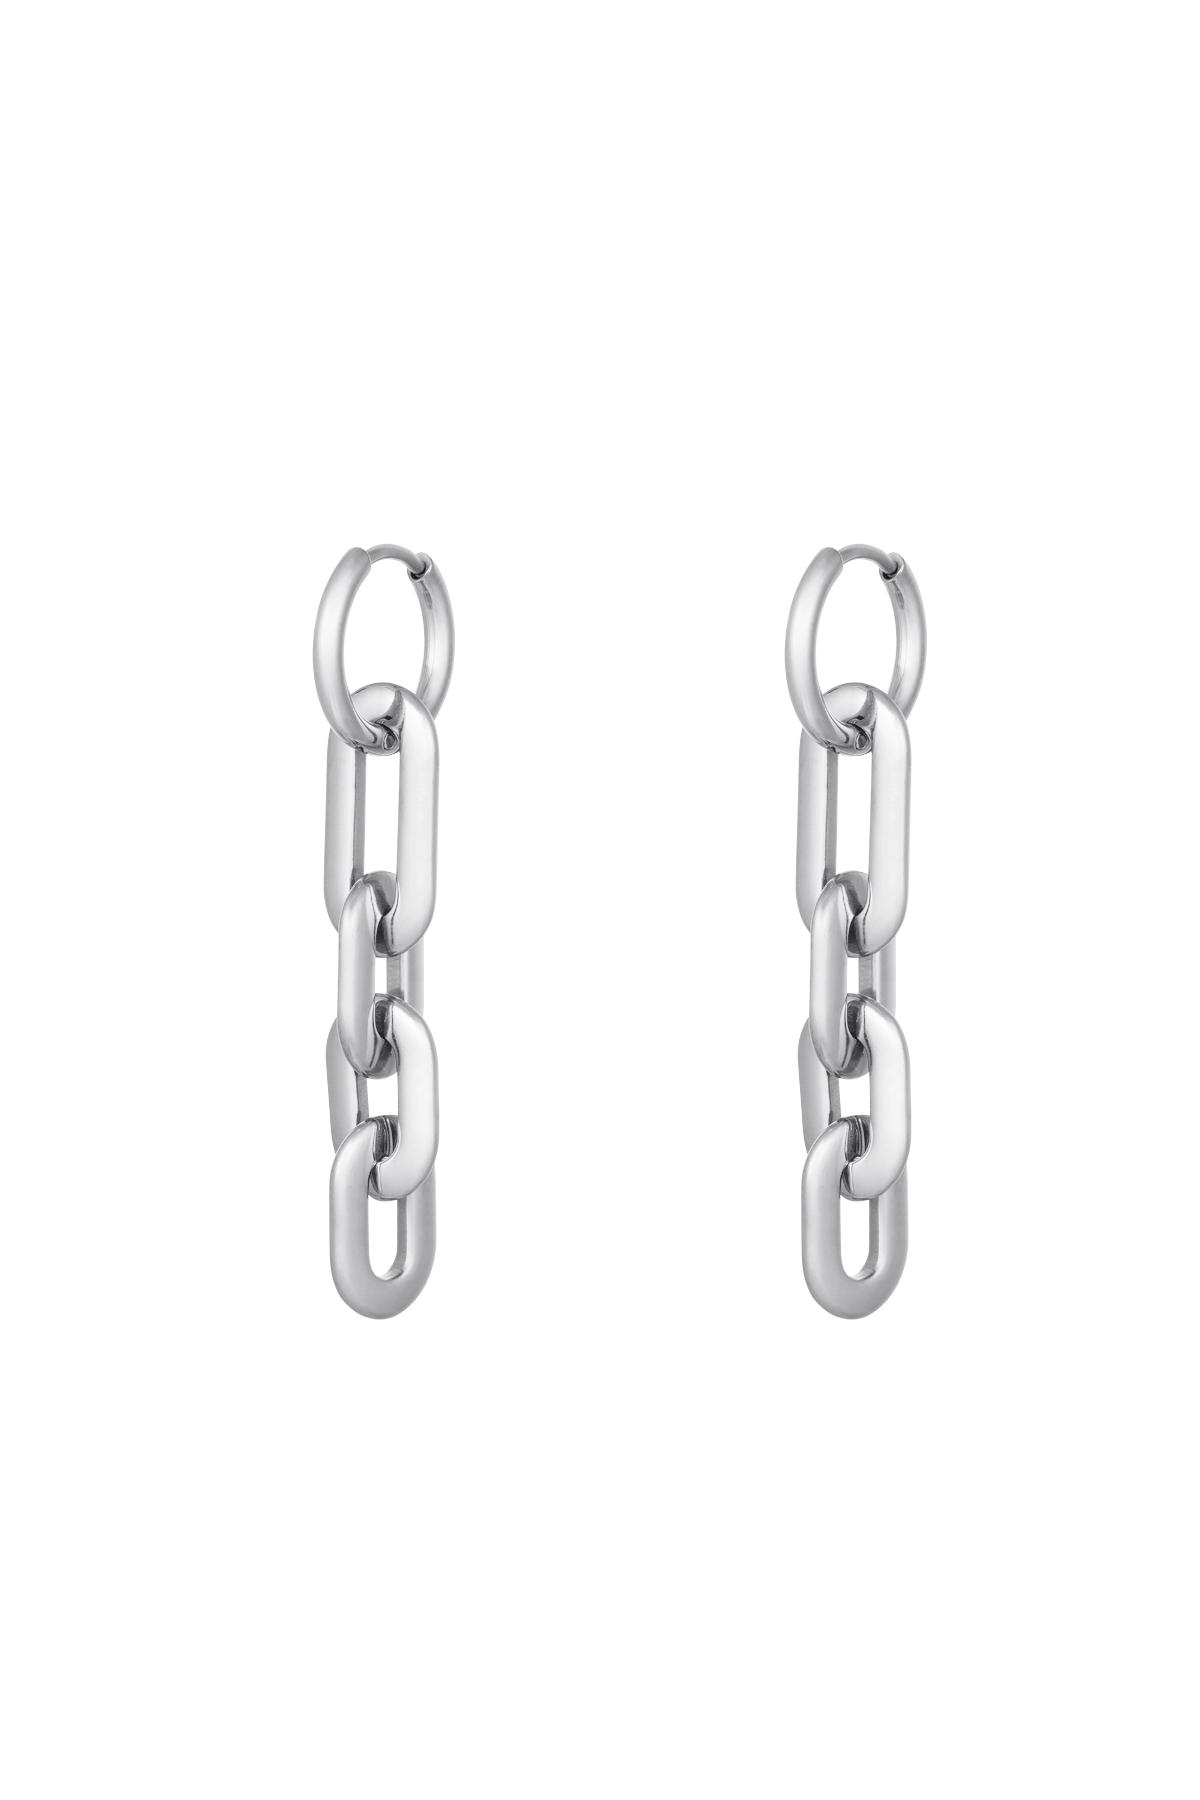 Chain link earrings Silver Stainless Steel